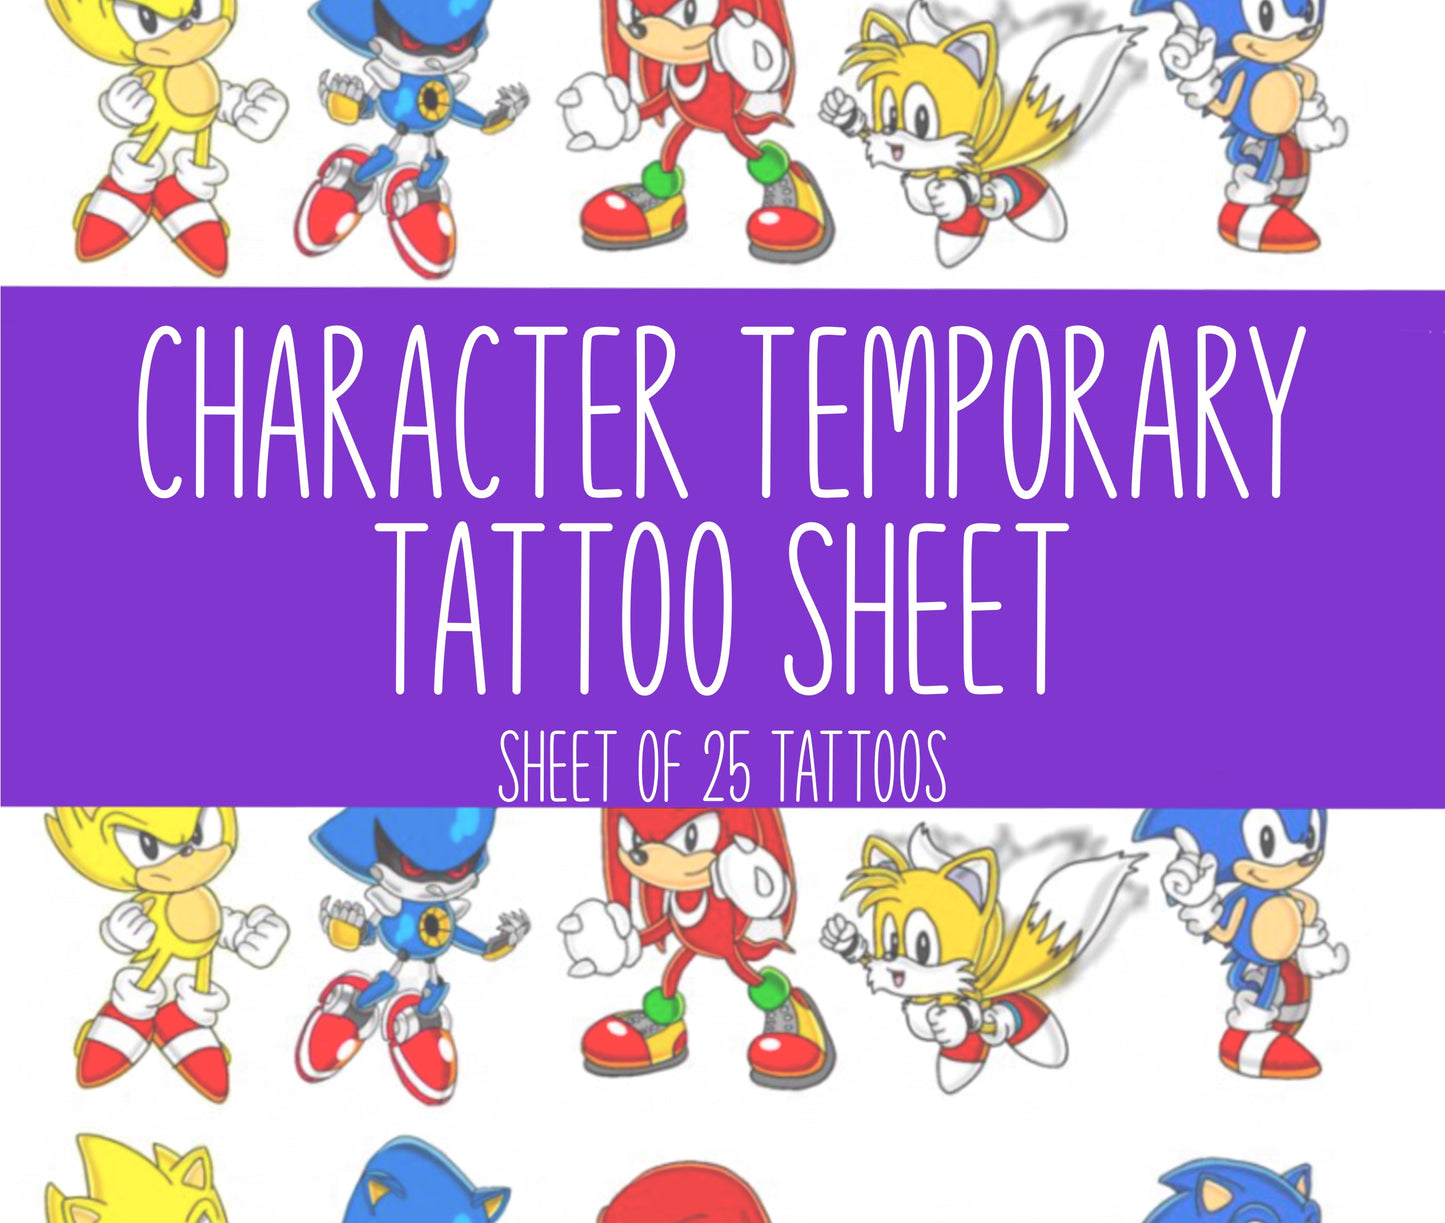 Hedgehog and Friends Tattoo Sheet